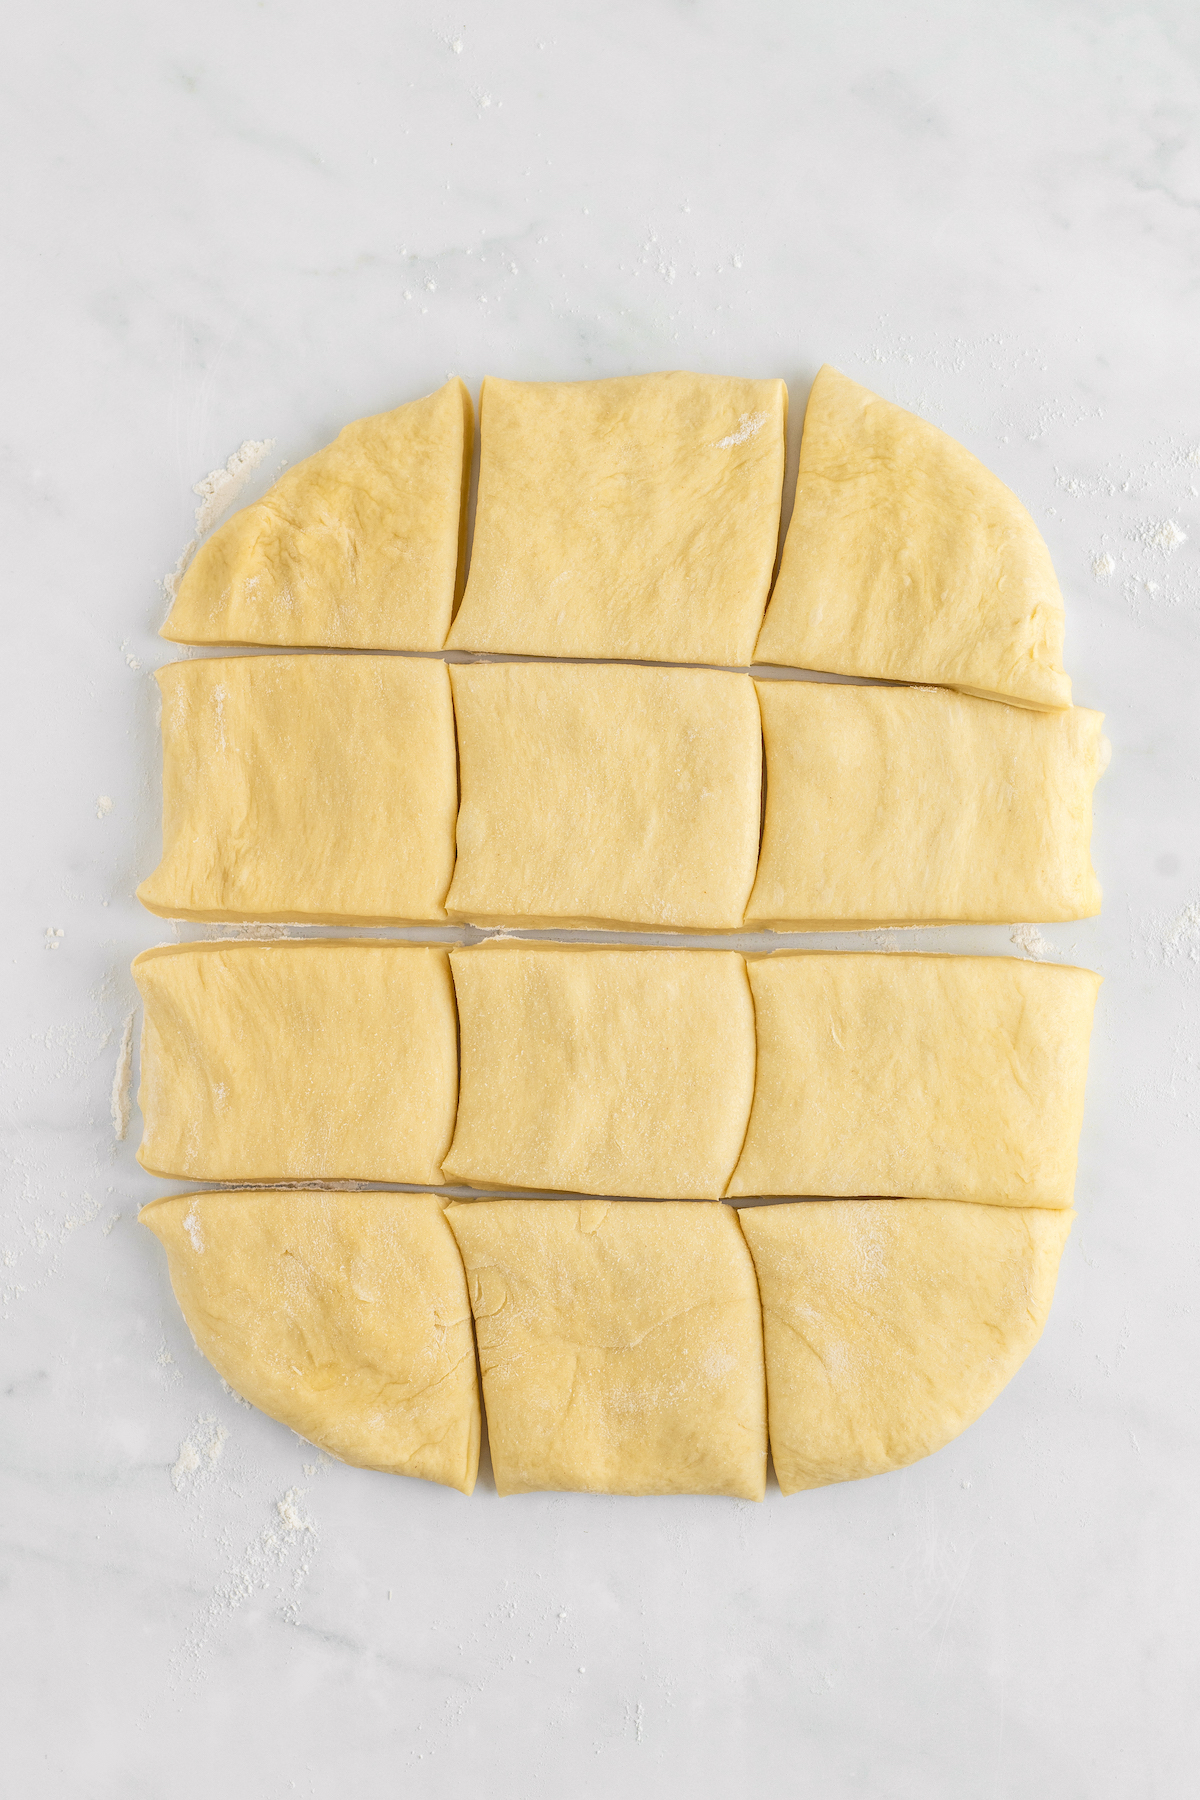 A rectangle of dough cut into twelve pieces.